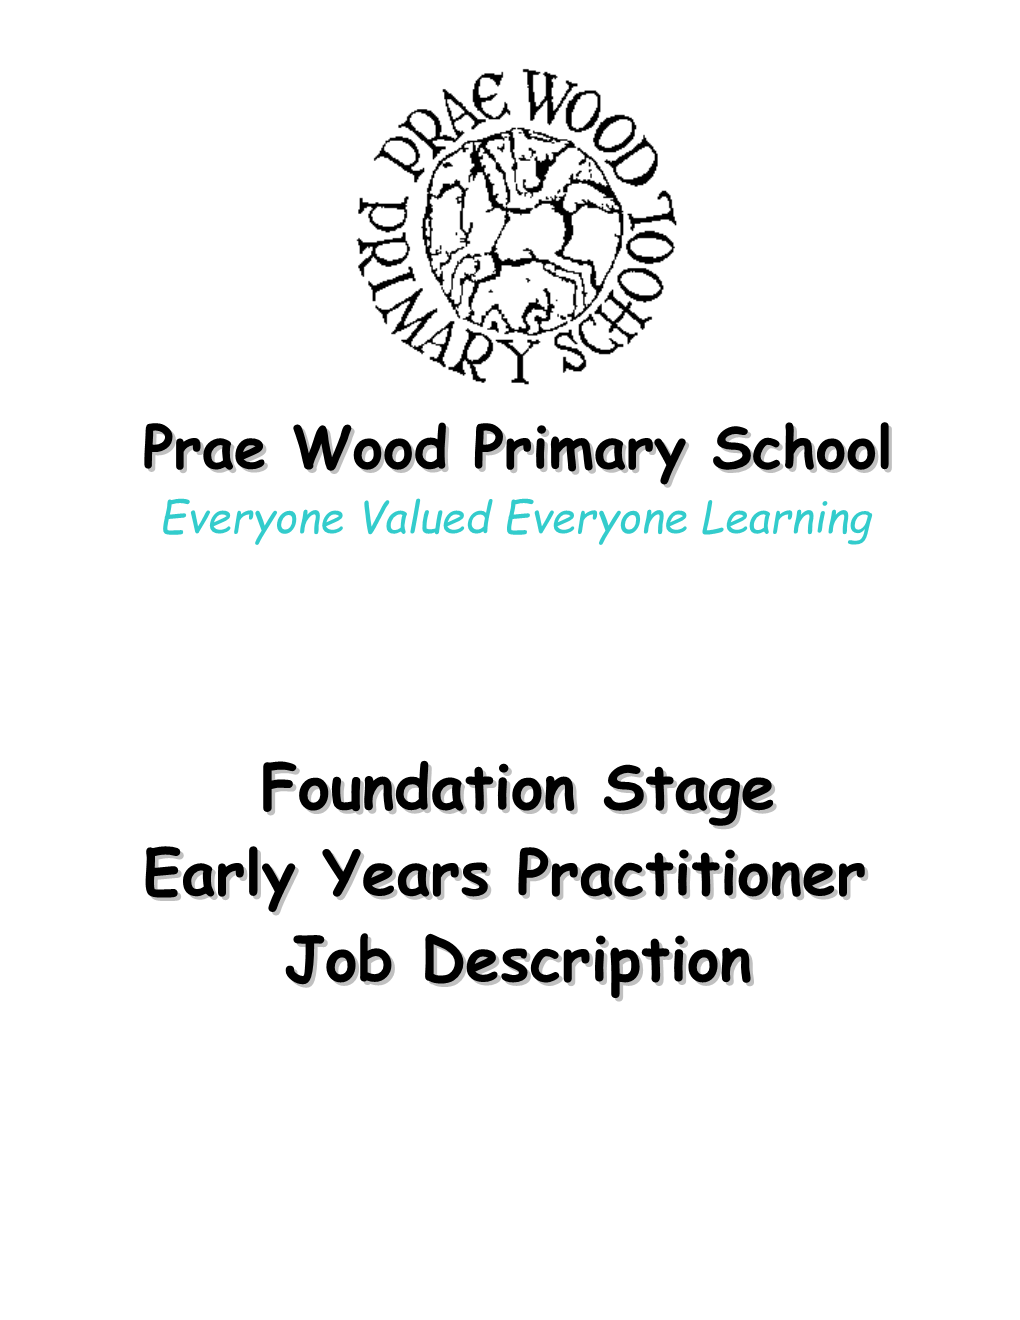 Praewoodprimary School